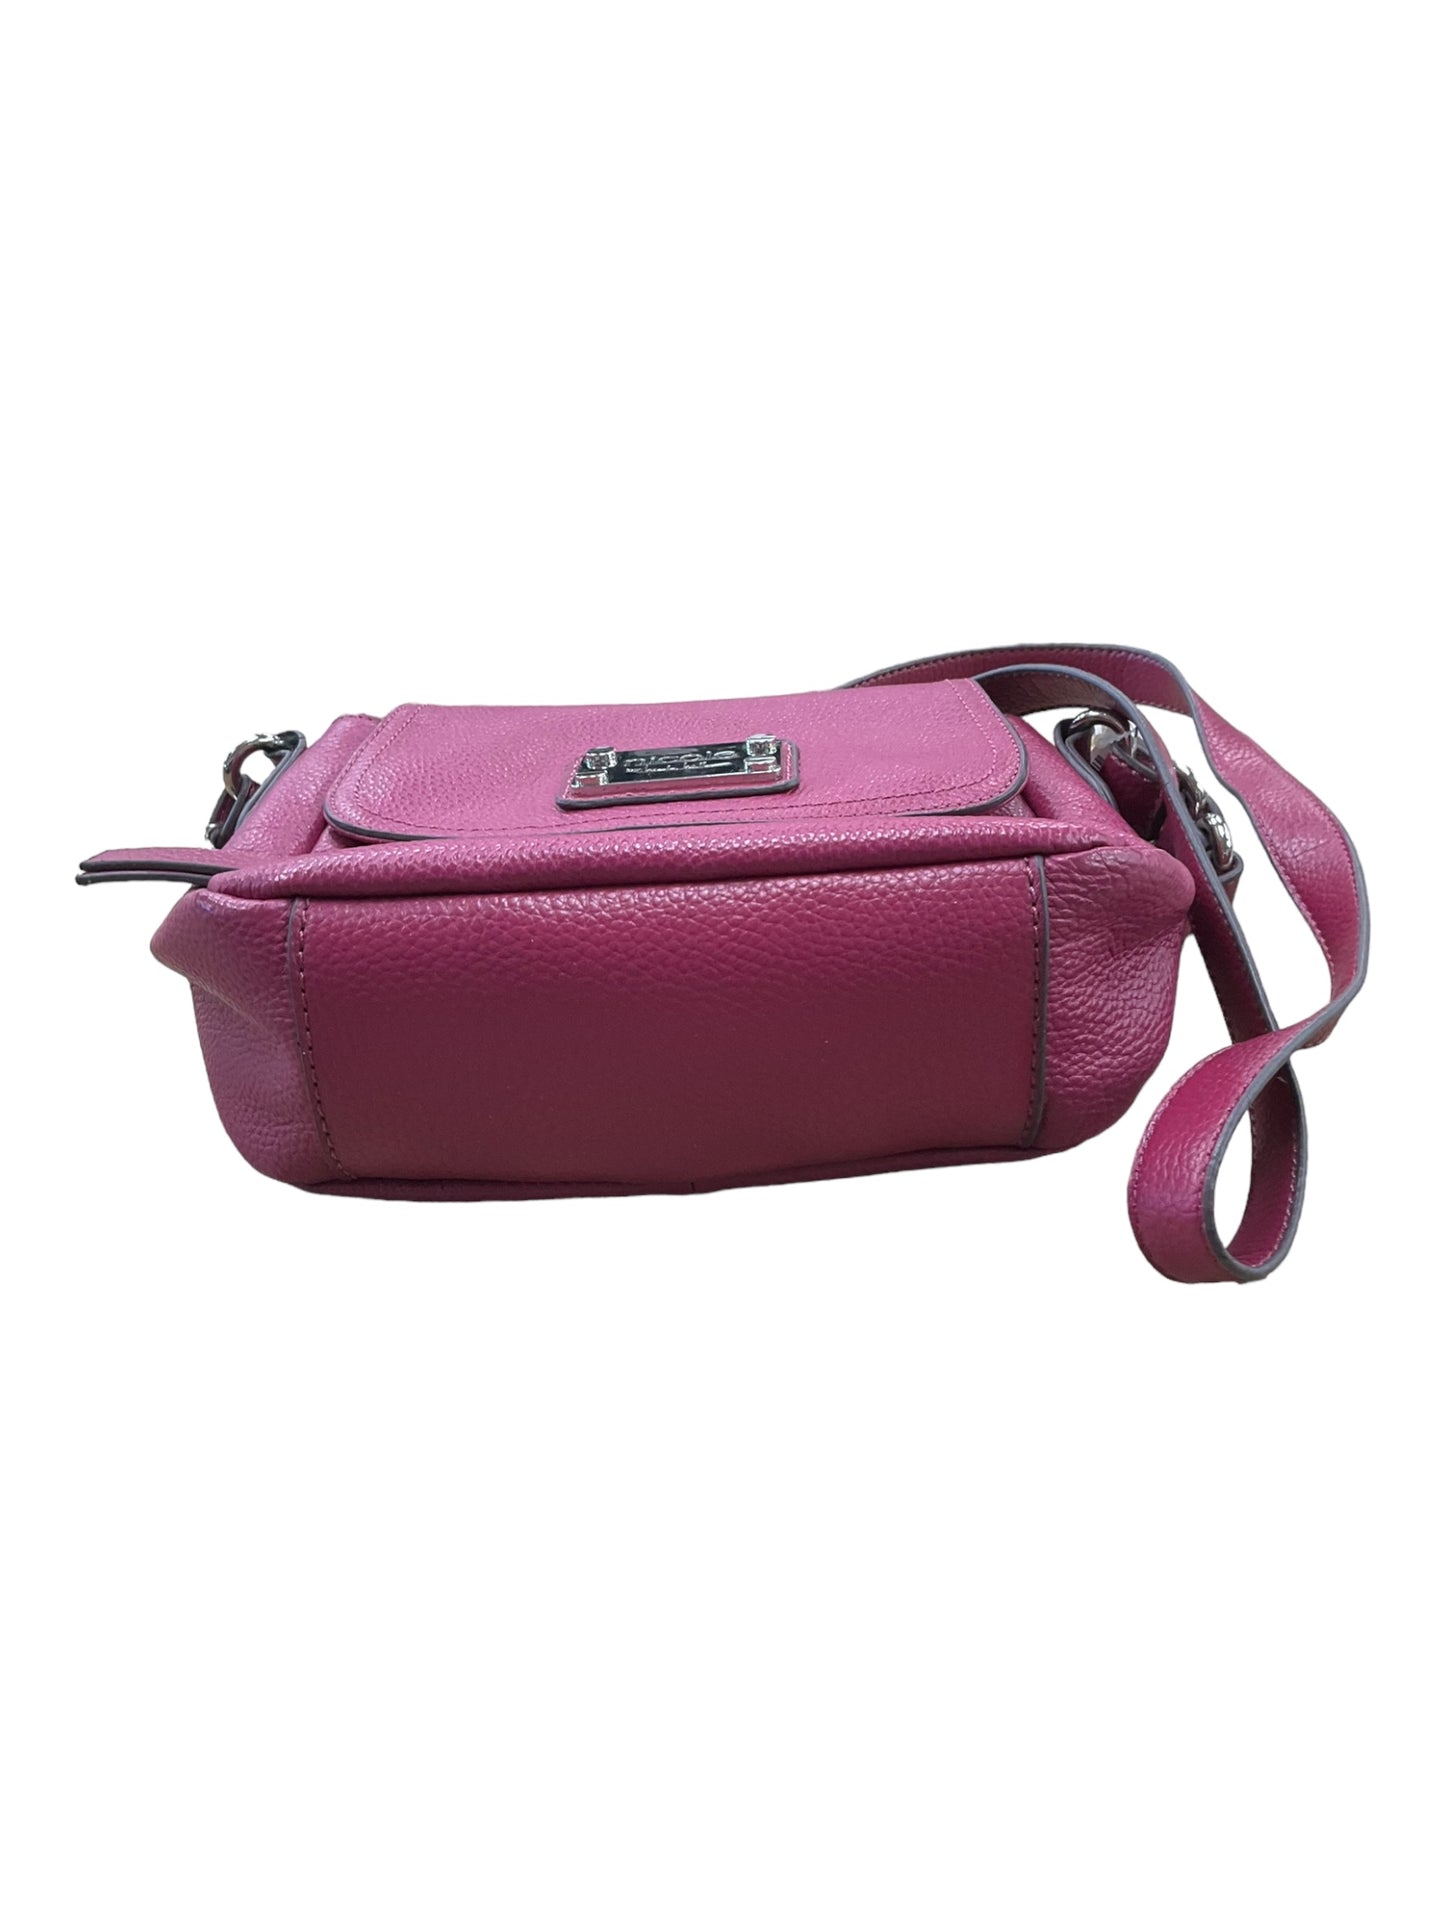 Handbag By Nicole  Size: Small